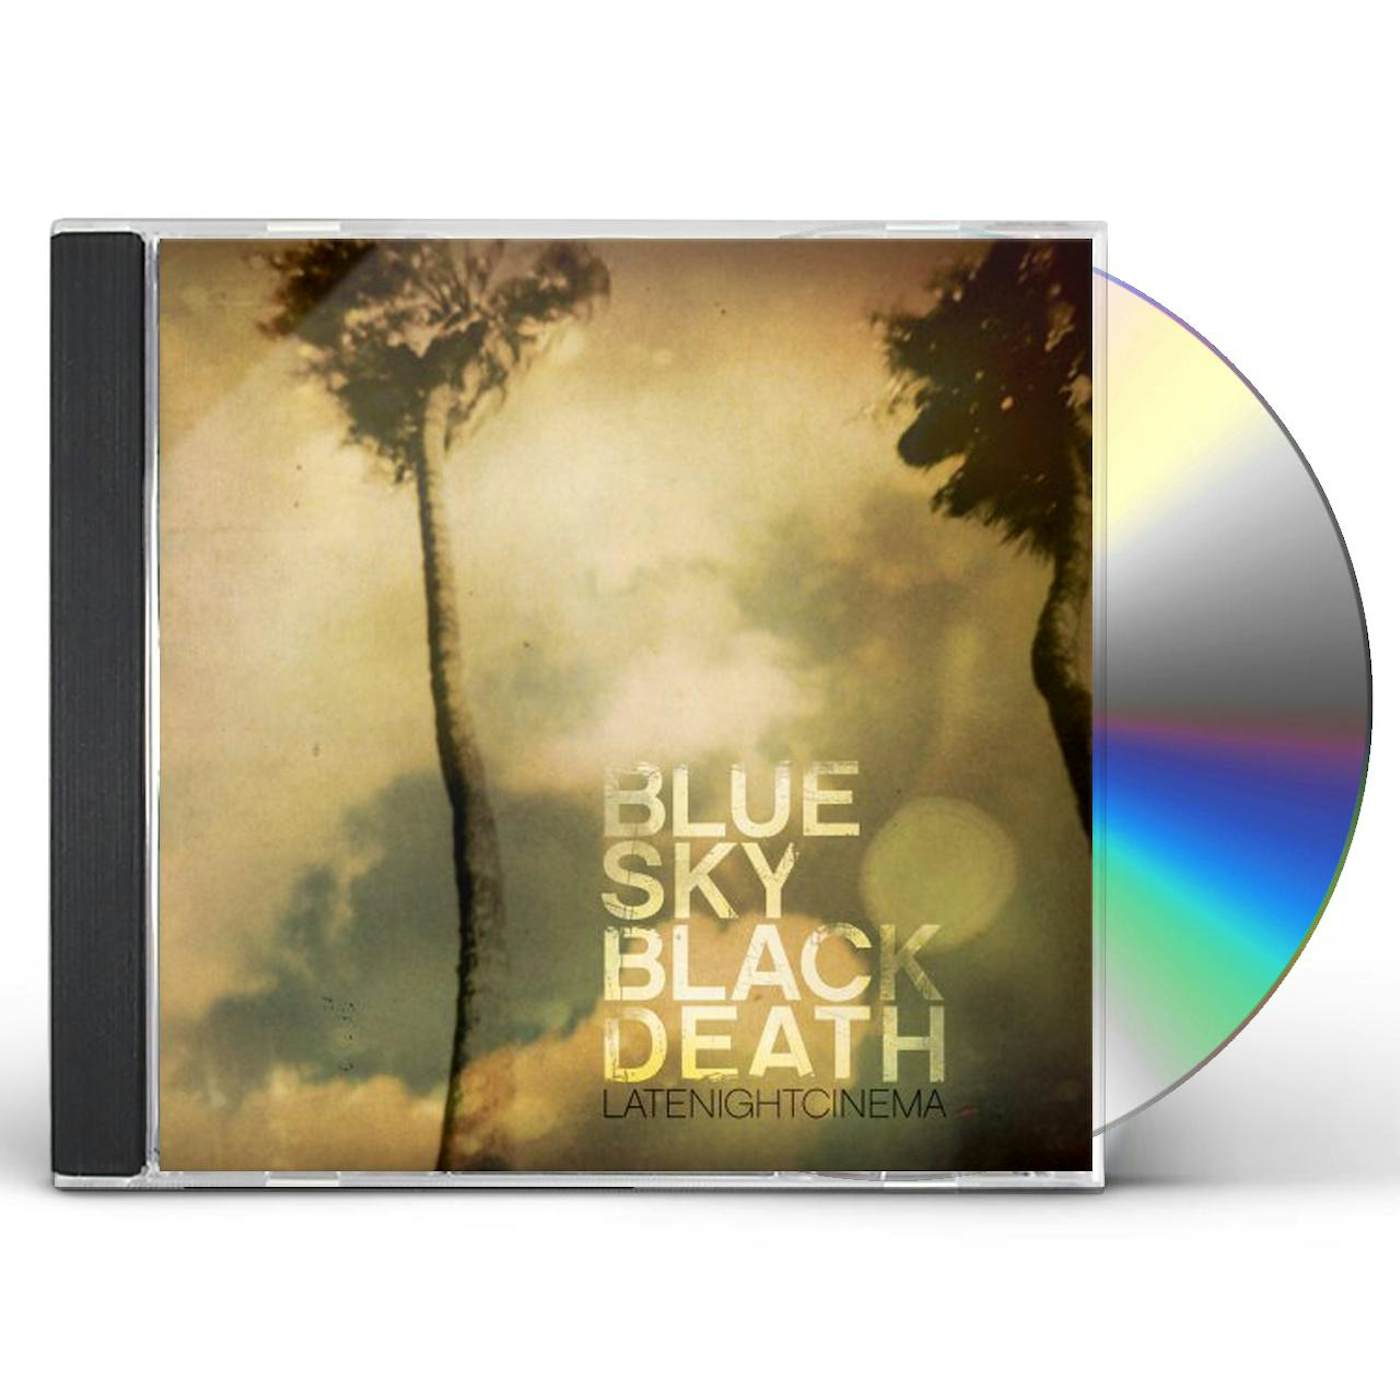 Blue Sky Black Death LATE NIGHT CINEMA CD